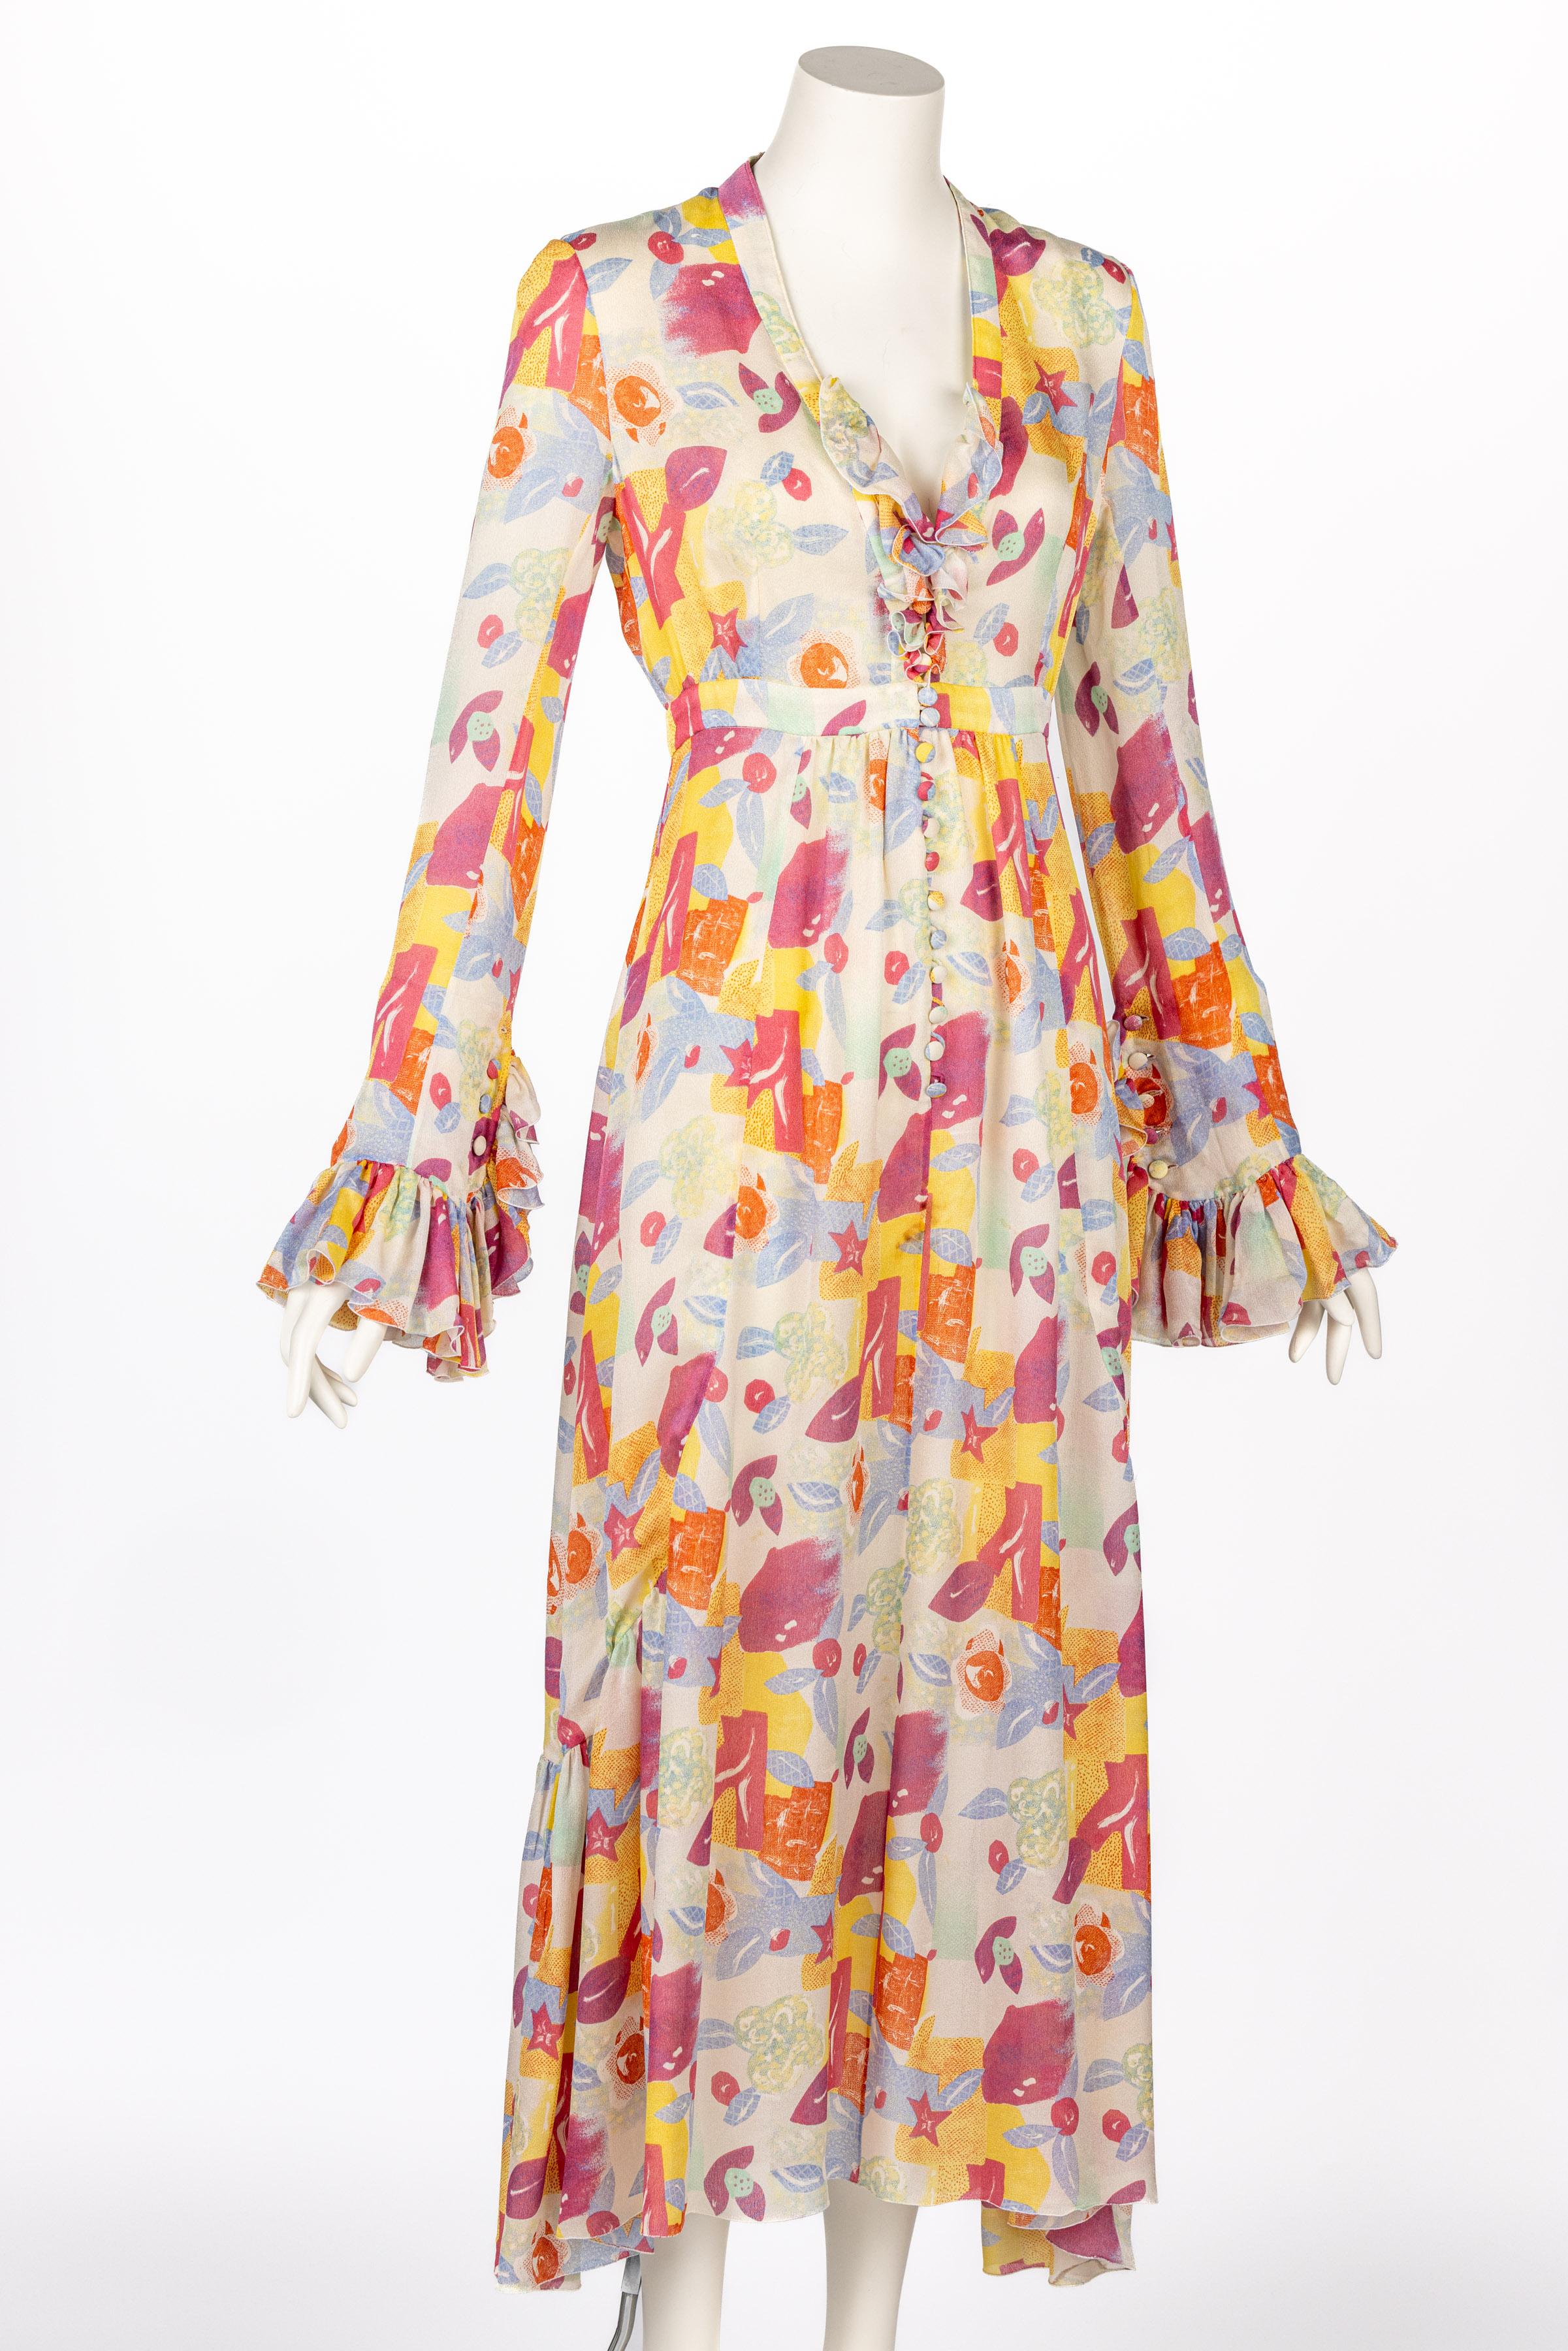 Chloe Karl Lagerfeld Floral Printed Silk Dress S/S 1993 Vogue Documented 1